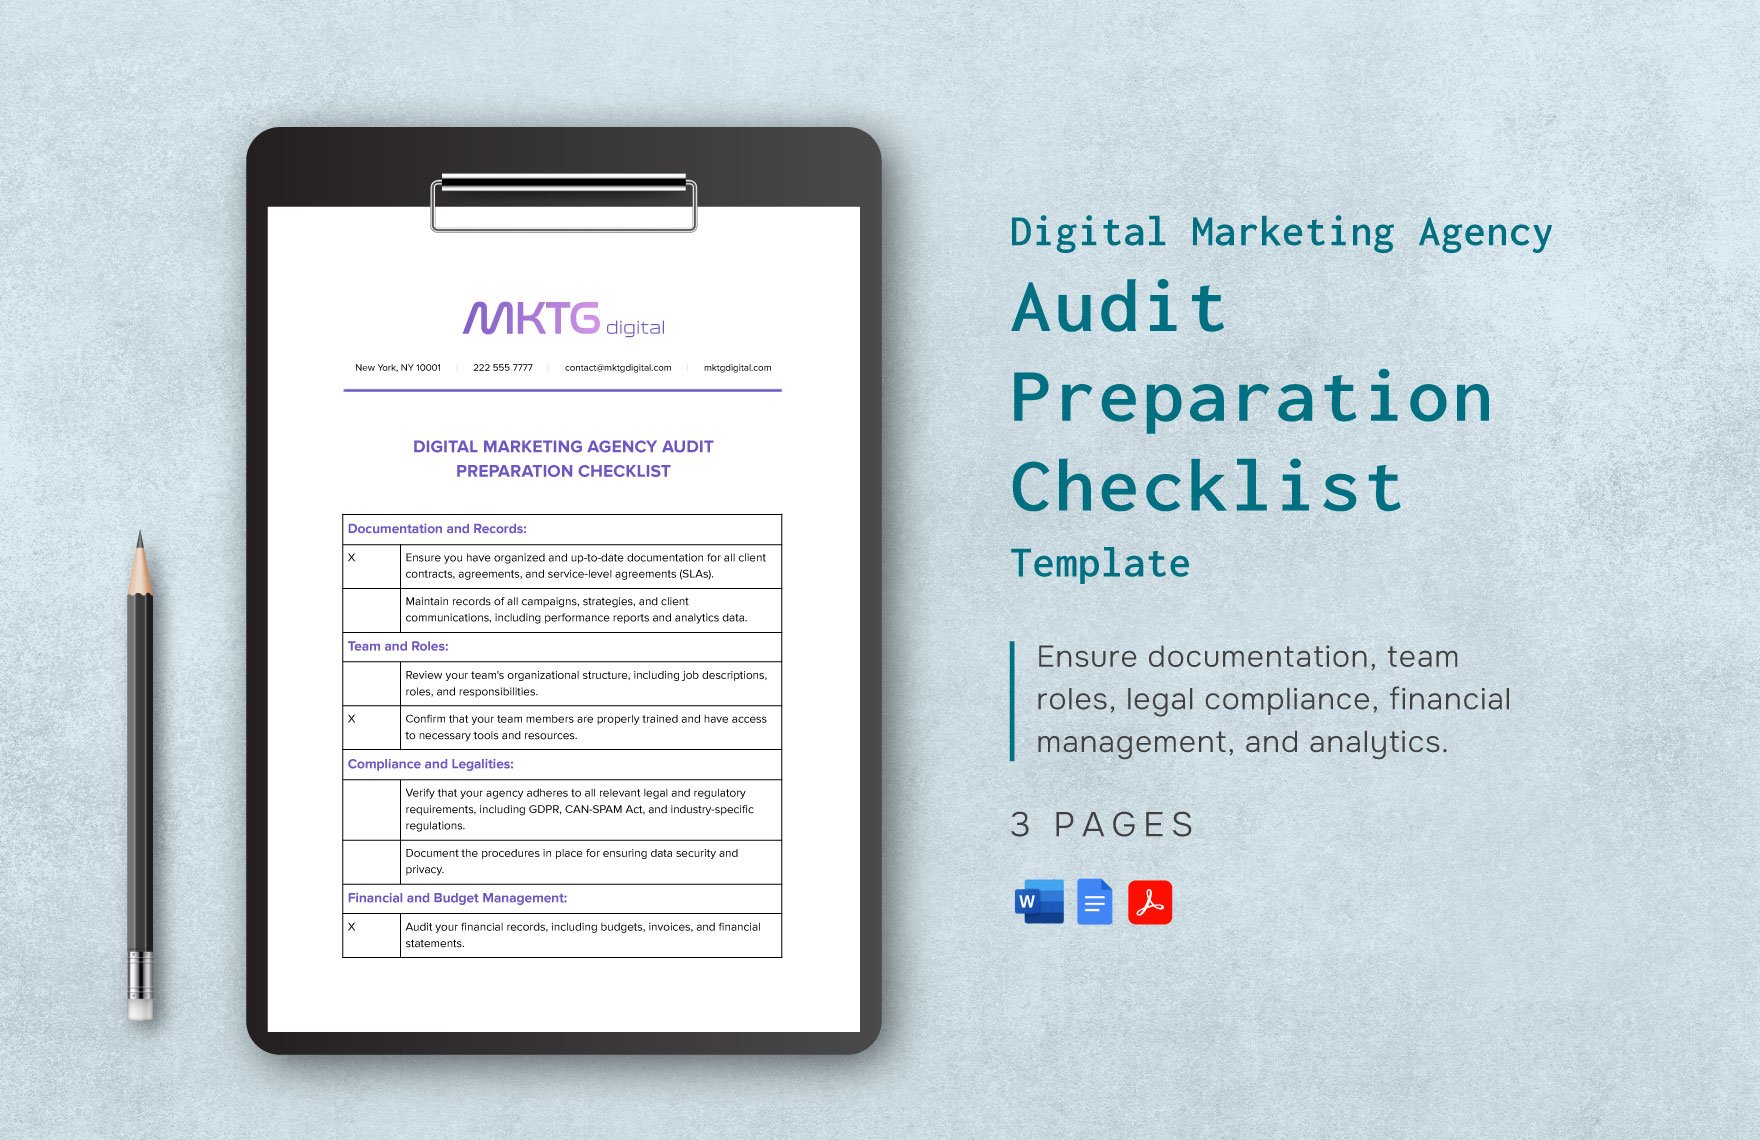 Digital Marketing Agency Audit Preparation Checklist Template in Word, Google Docs, PDF